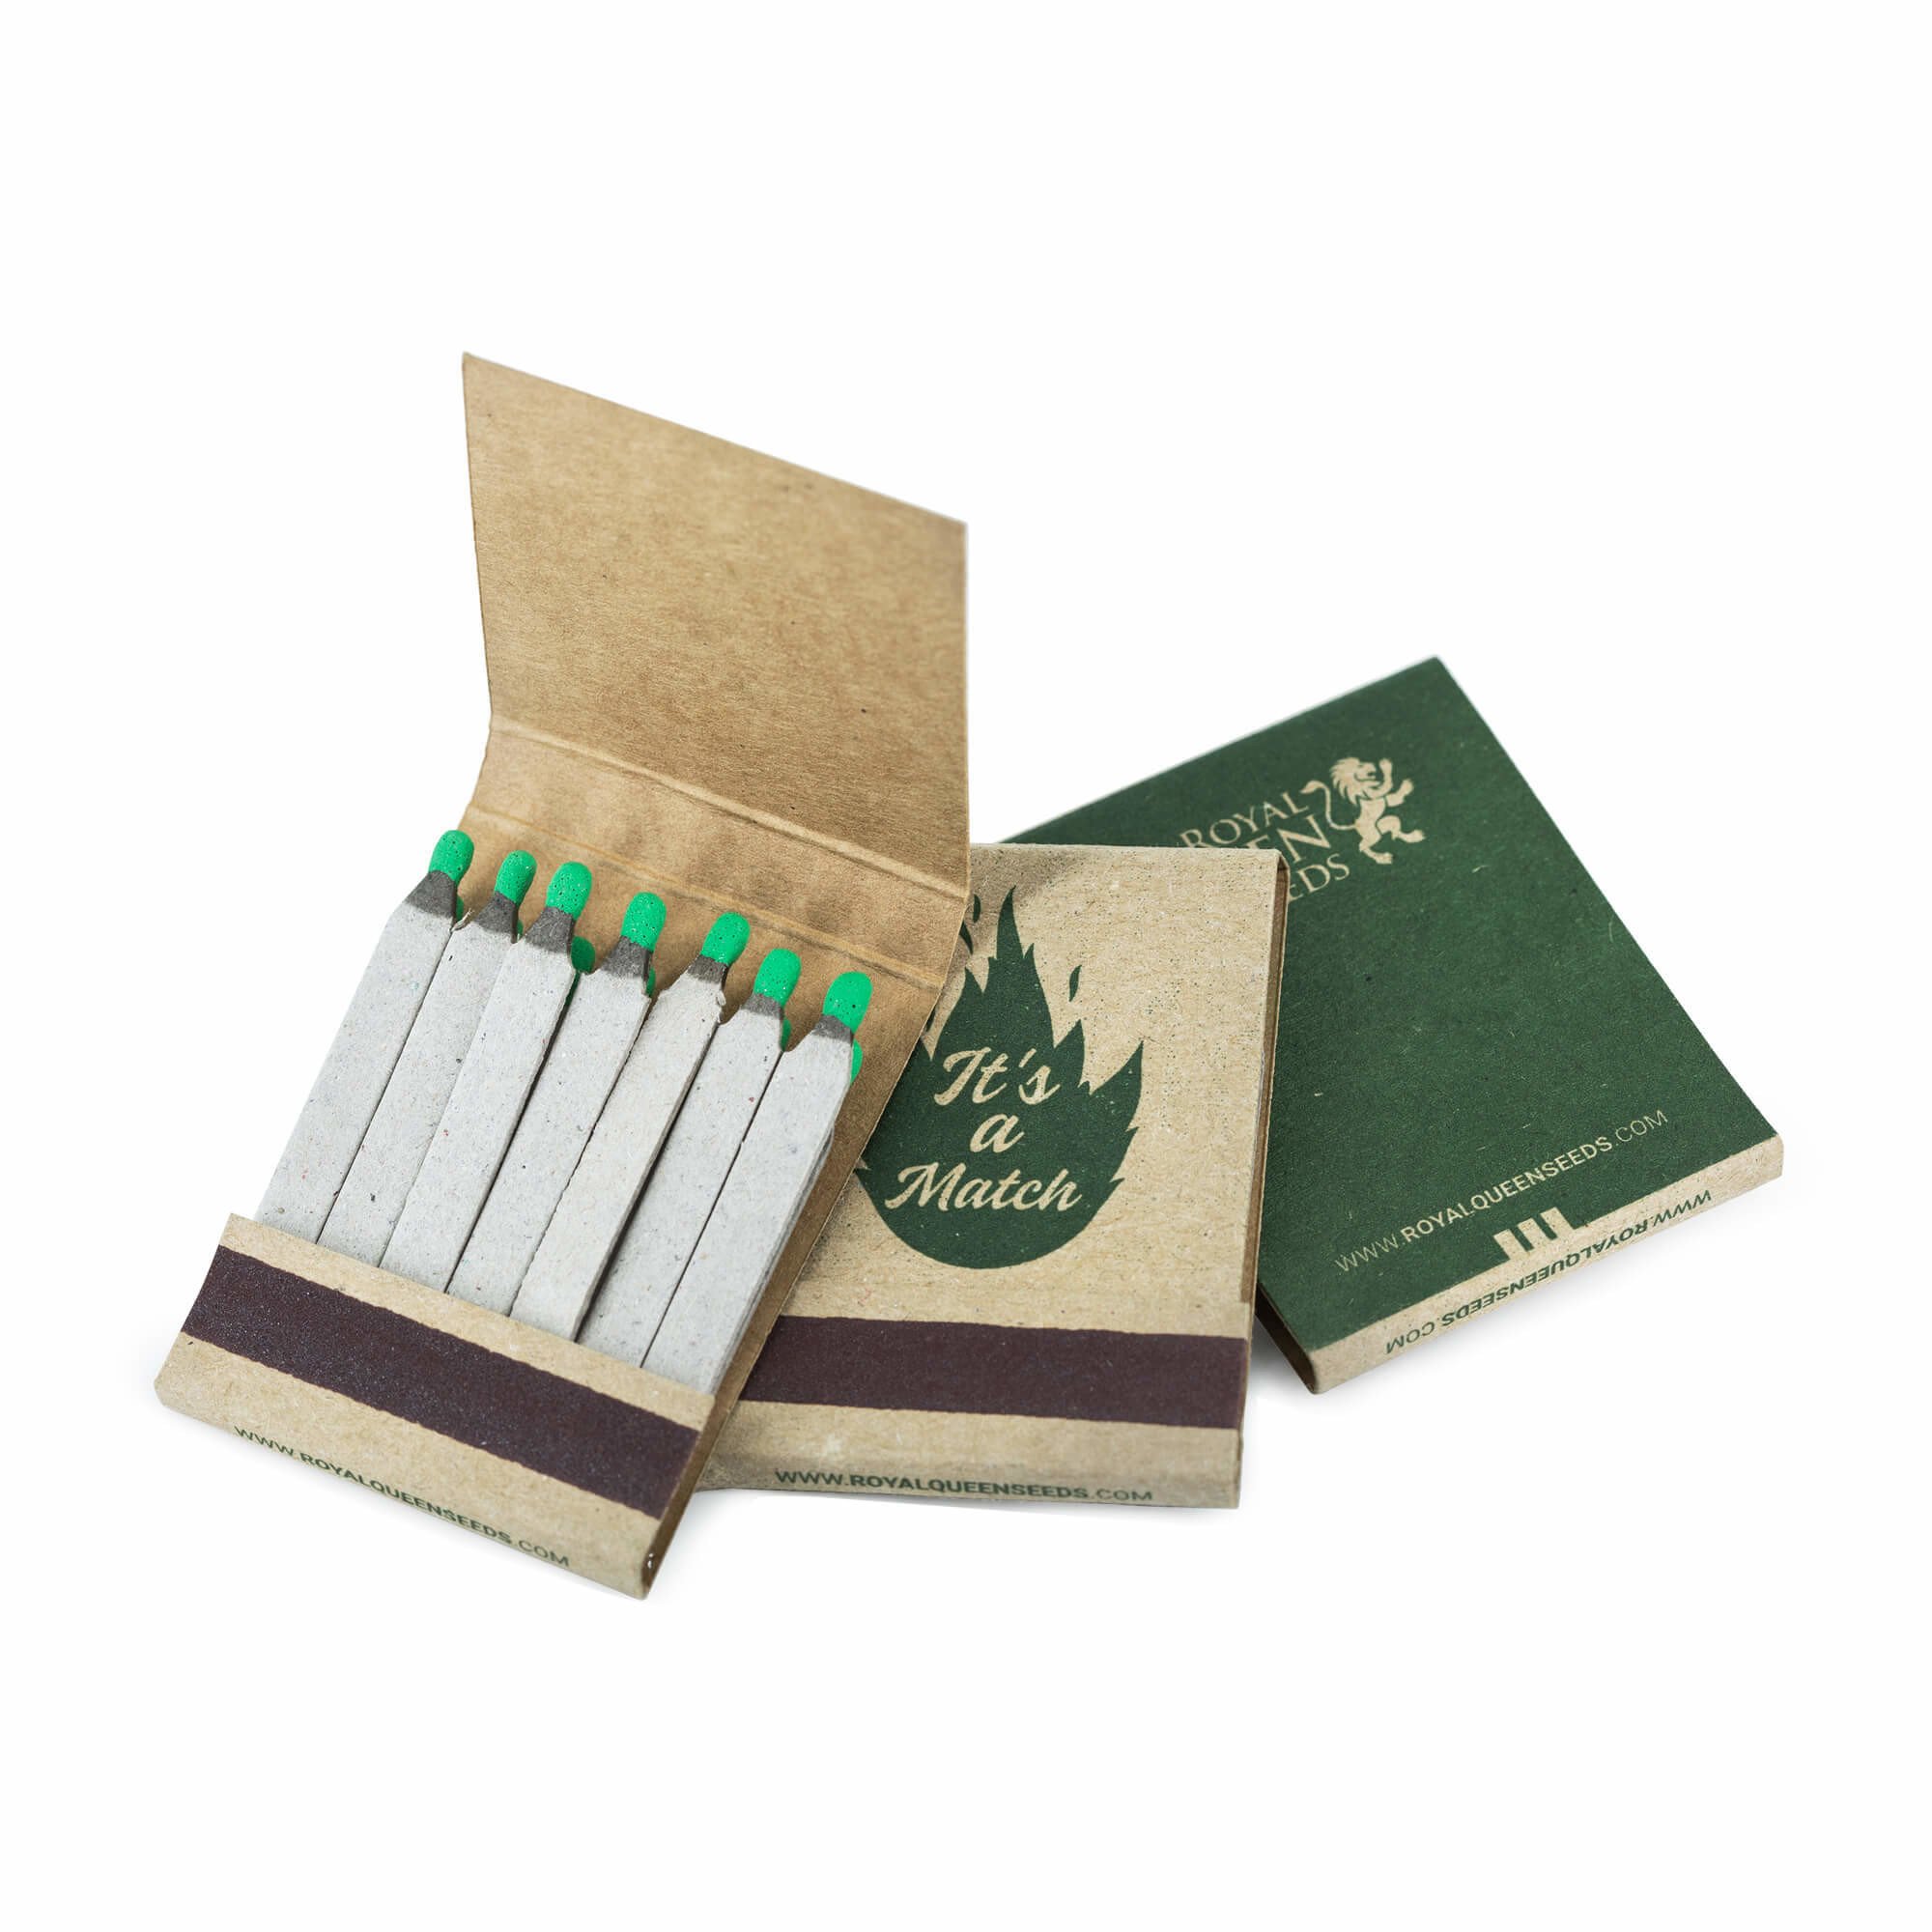 Box Cigarettes Matches, Cigarette Lighter Match Boxes